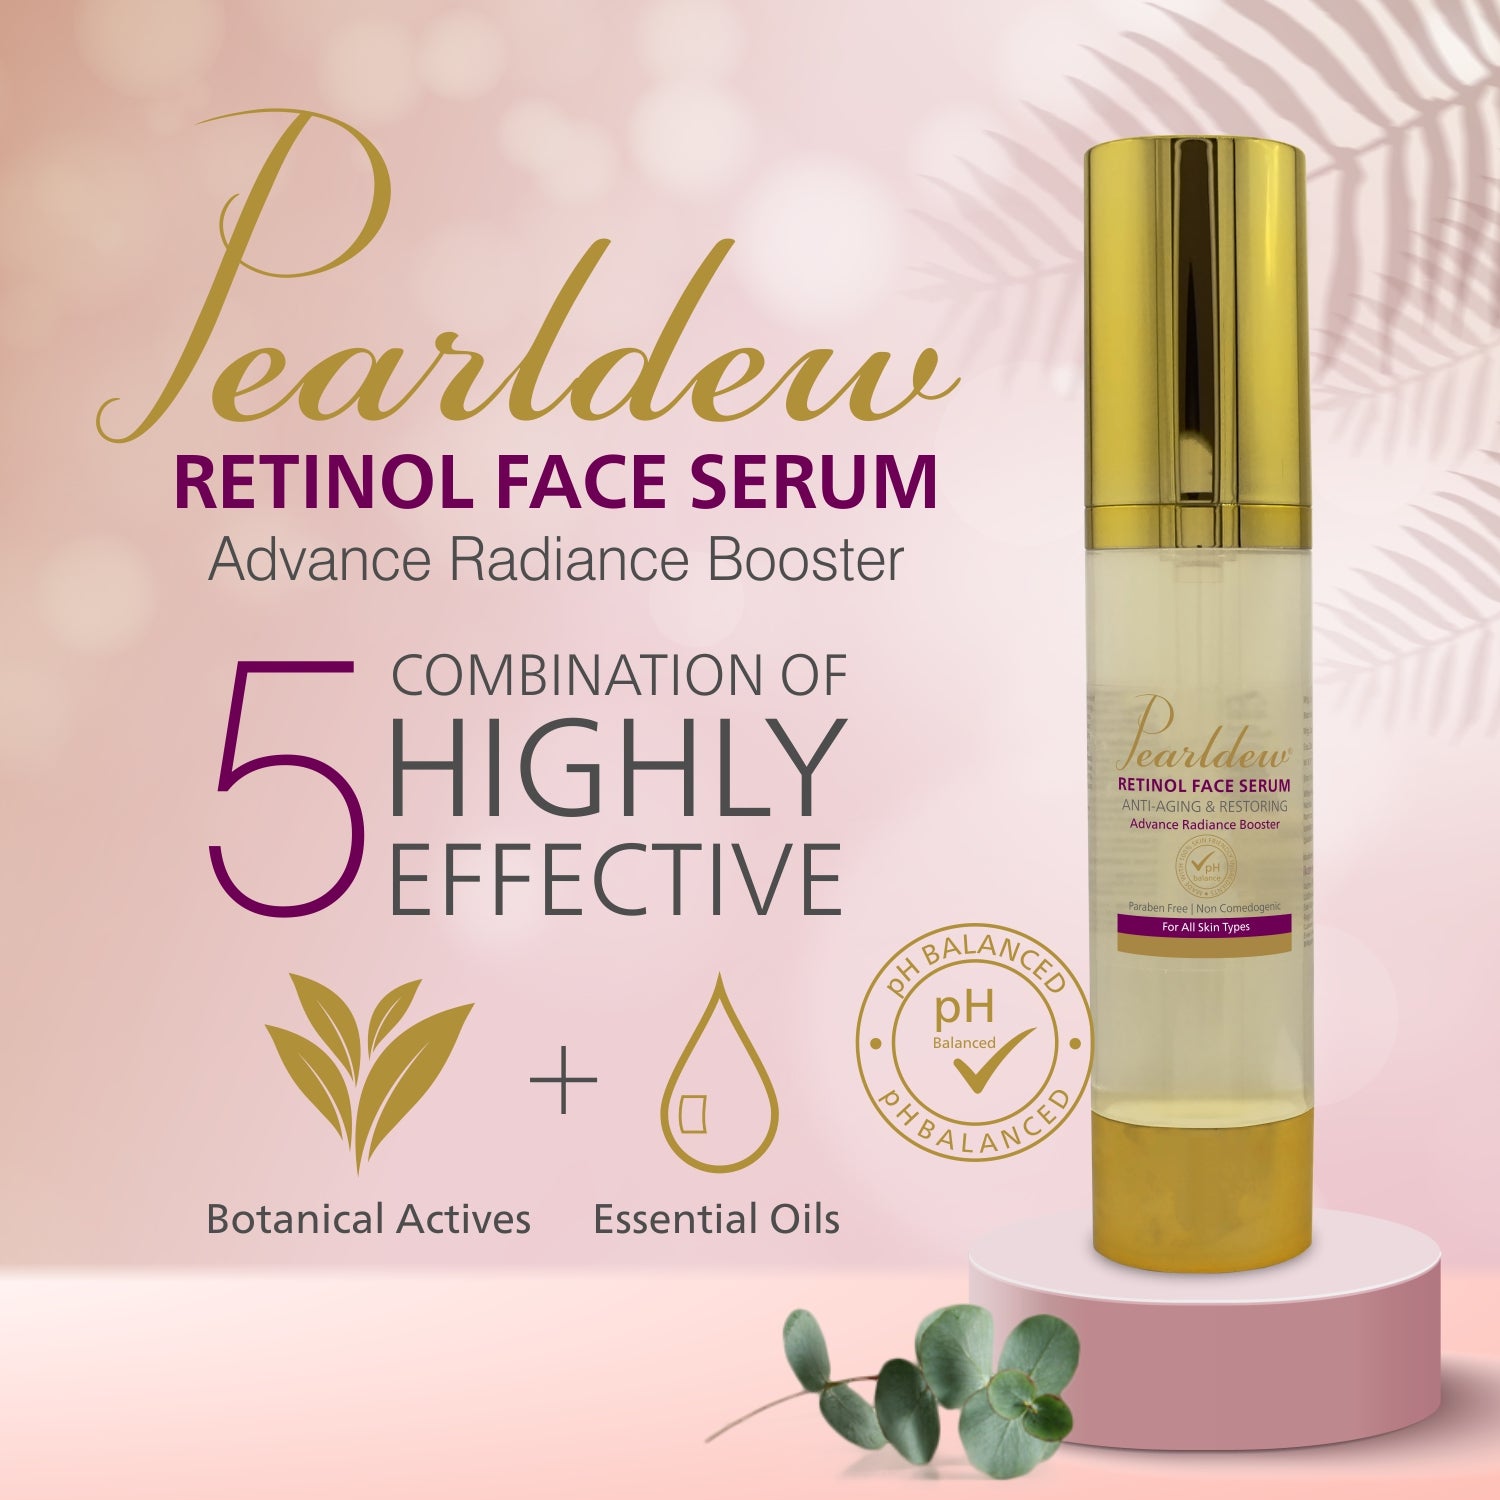 Pearldew Retinol Face Serum (50 ml)